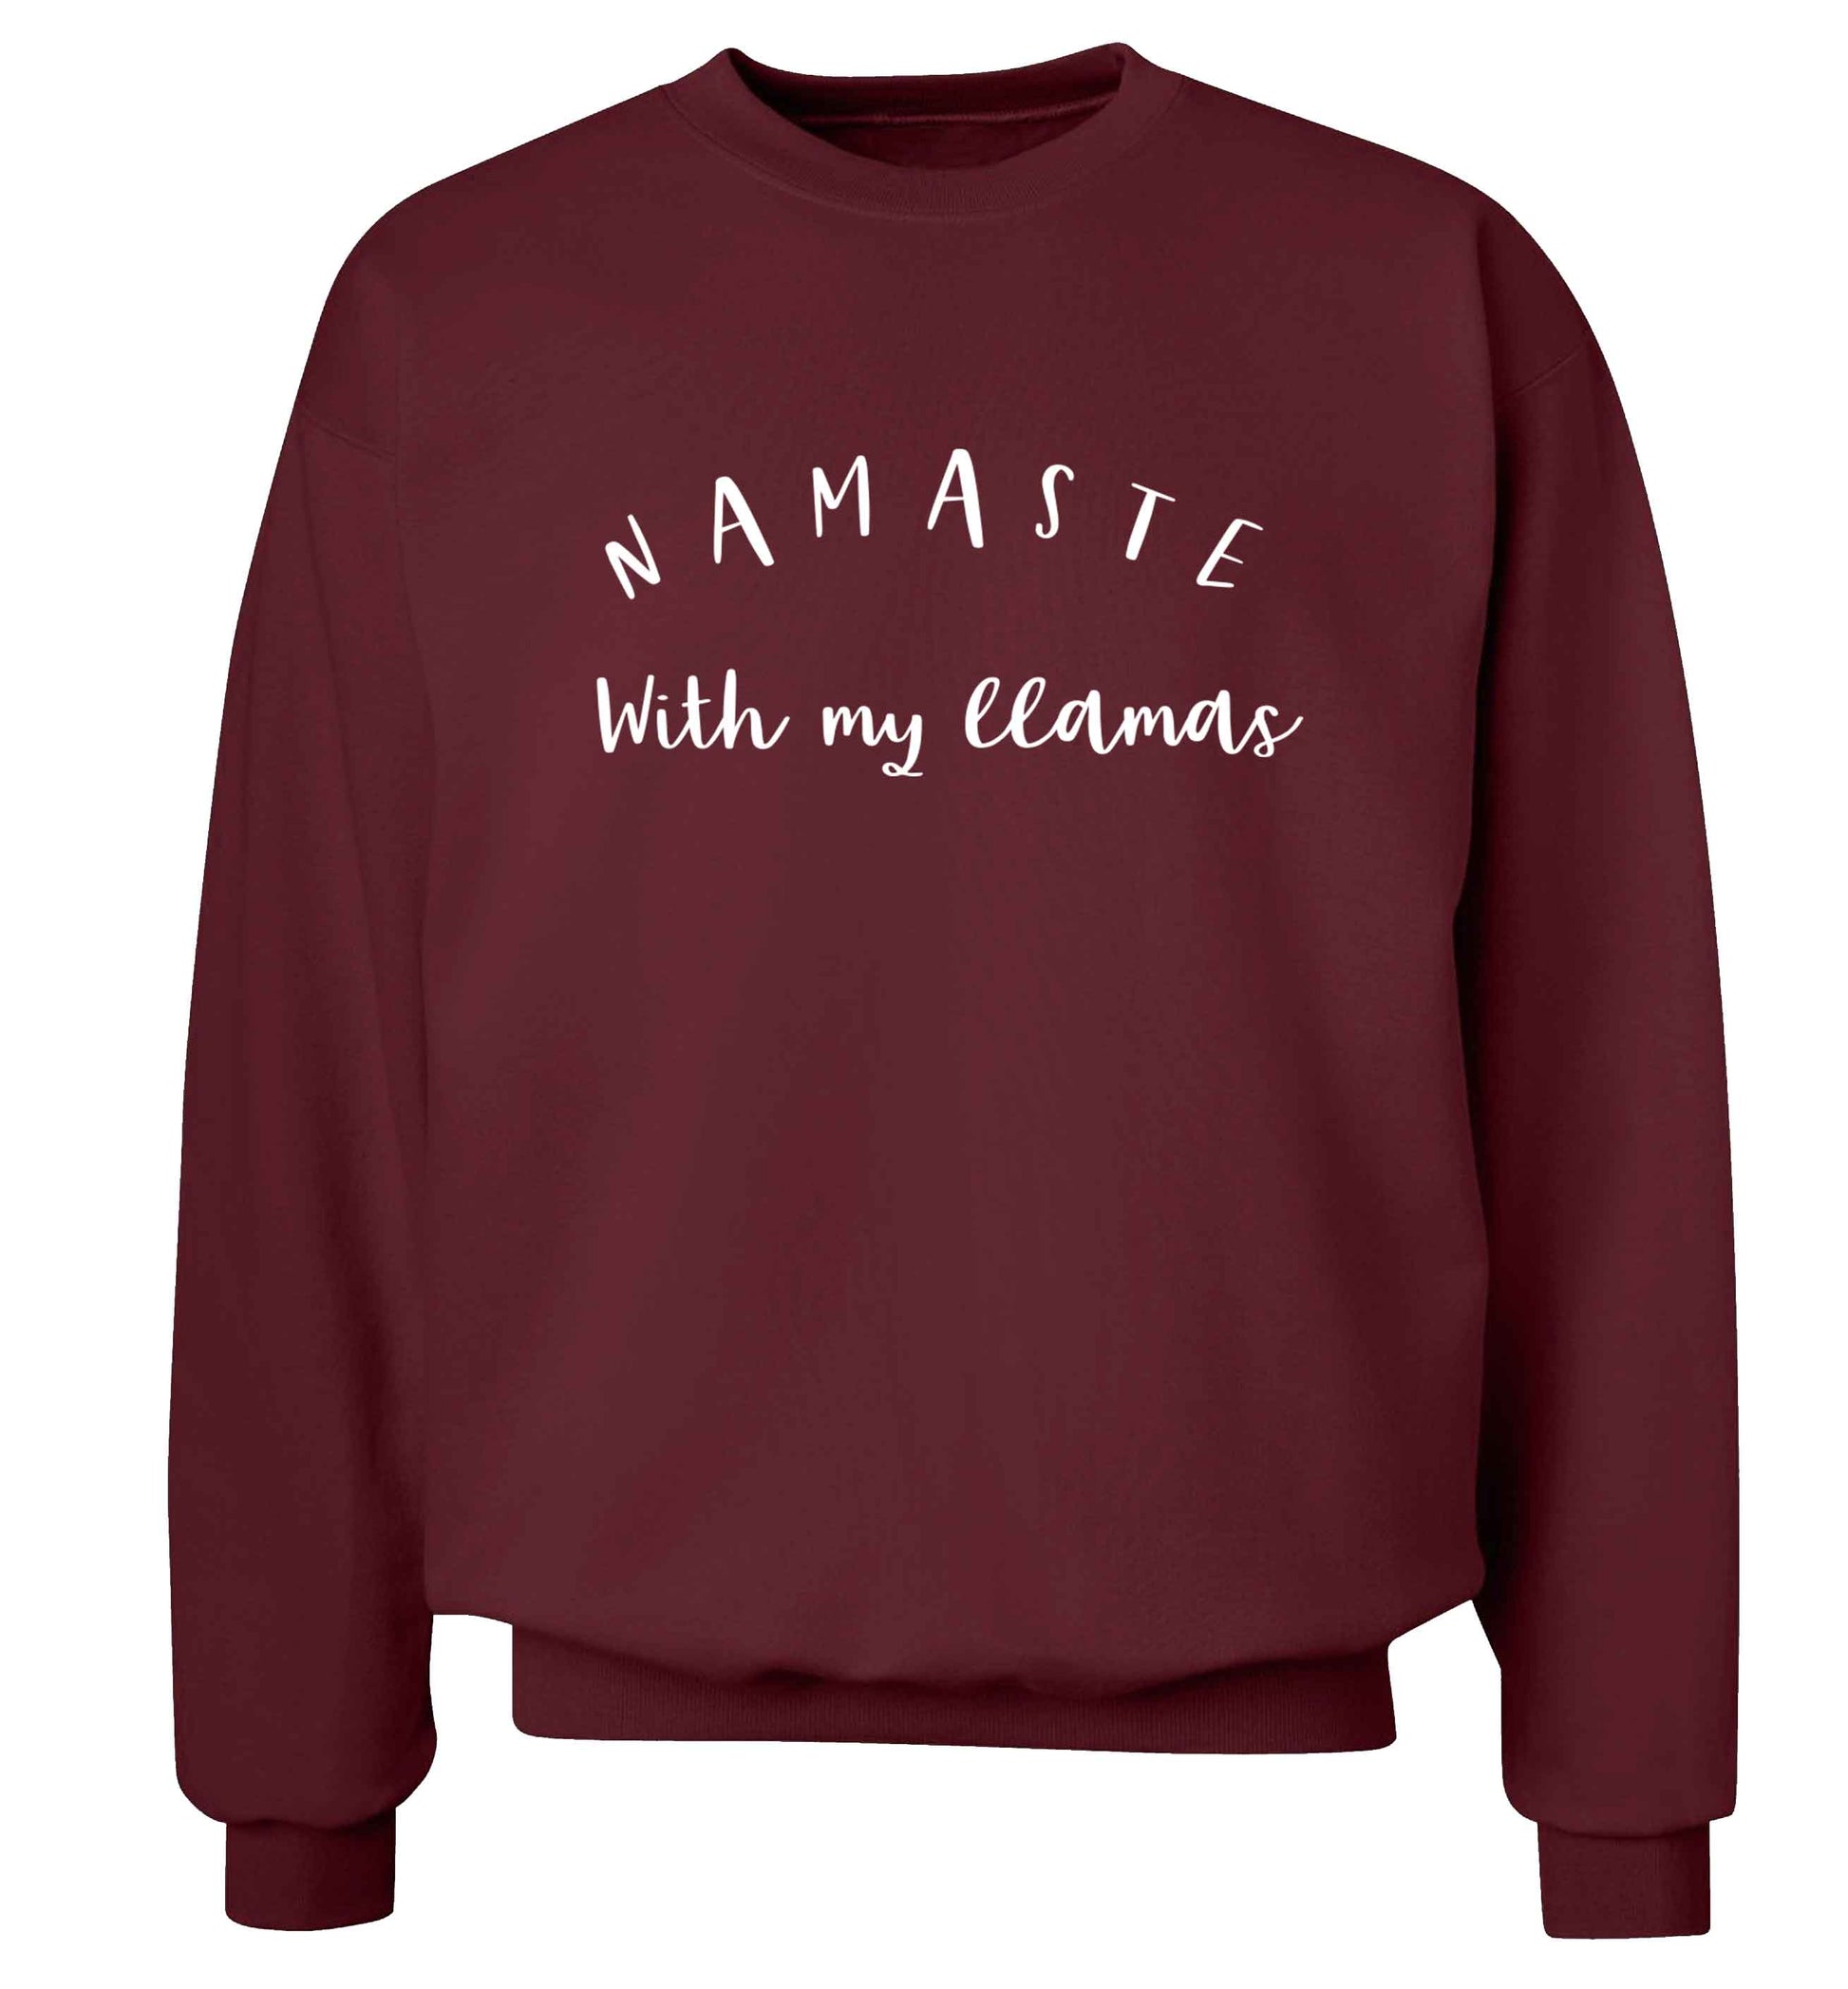 Namaste with my llamas Adult's unisex maroon Sweater 2XL